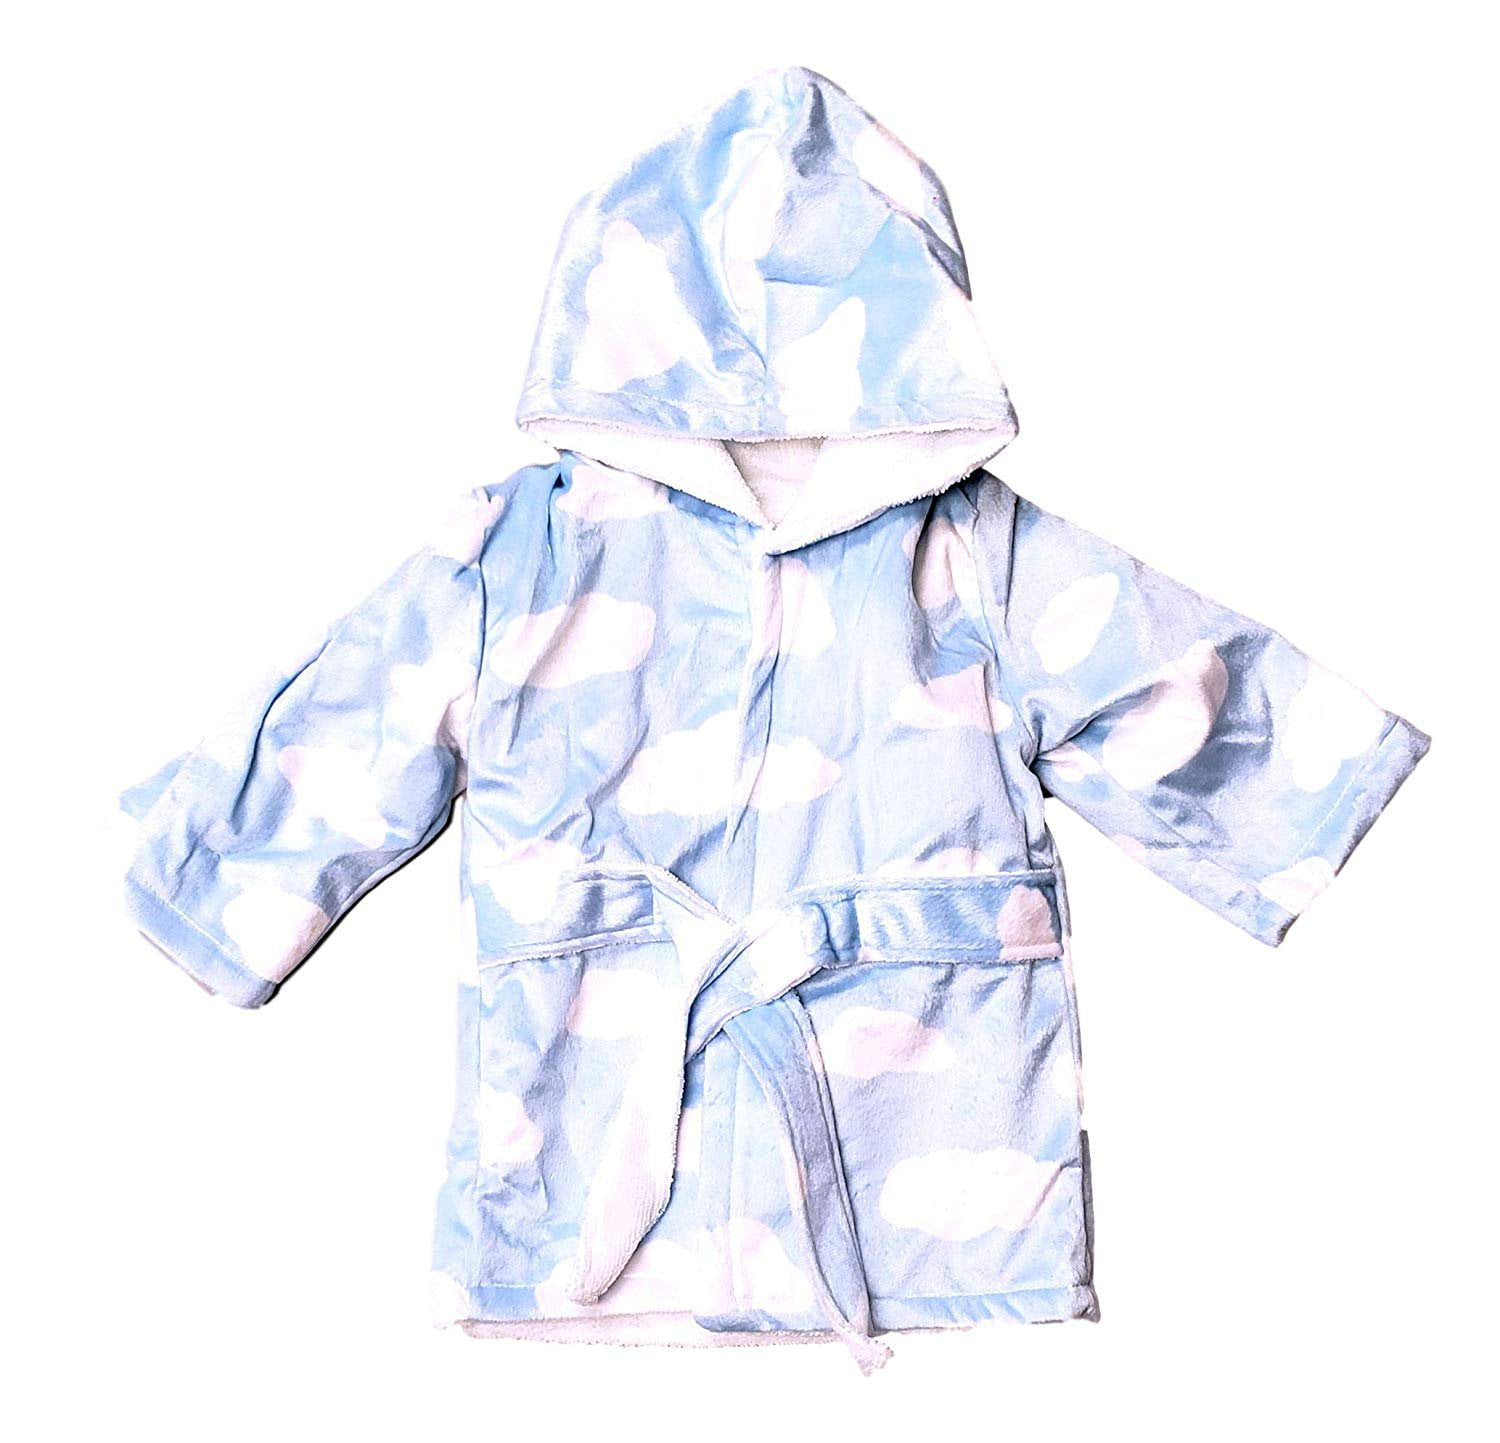 Toddler Unisex Baby Robe Hooded Fleece Bathrobe and Towel for Kids 9-36 Month 